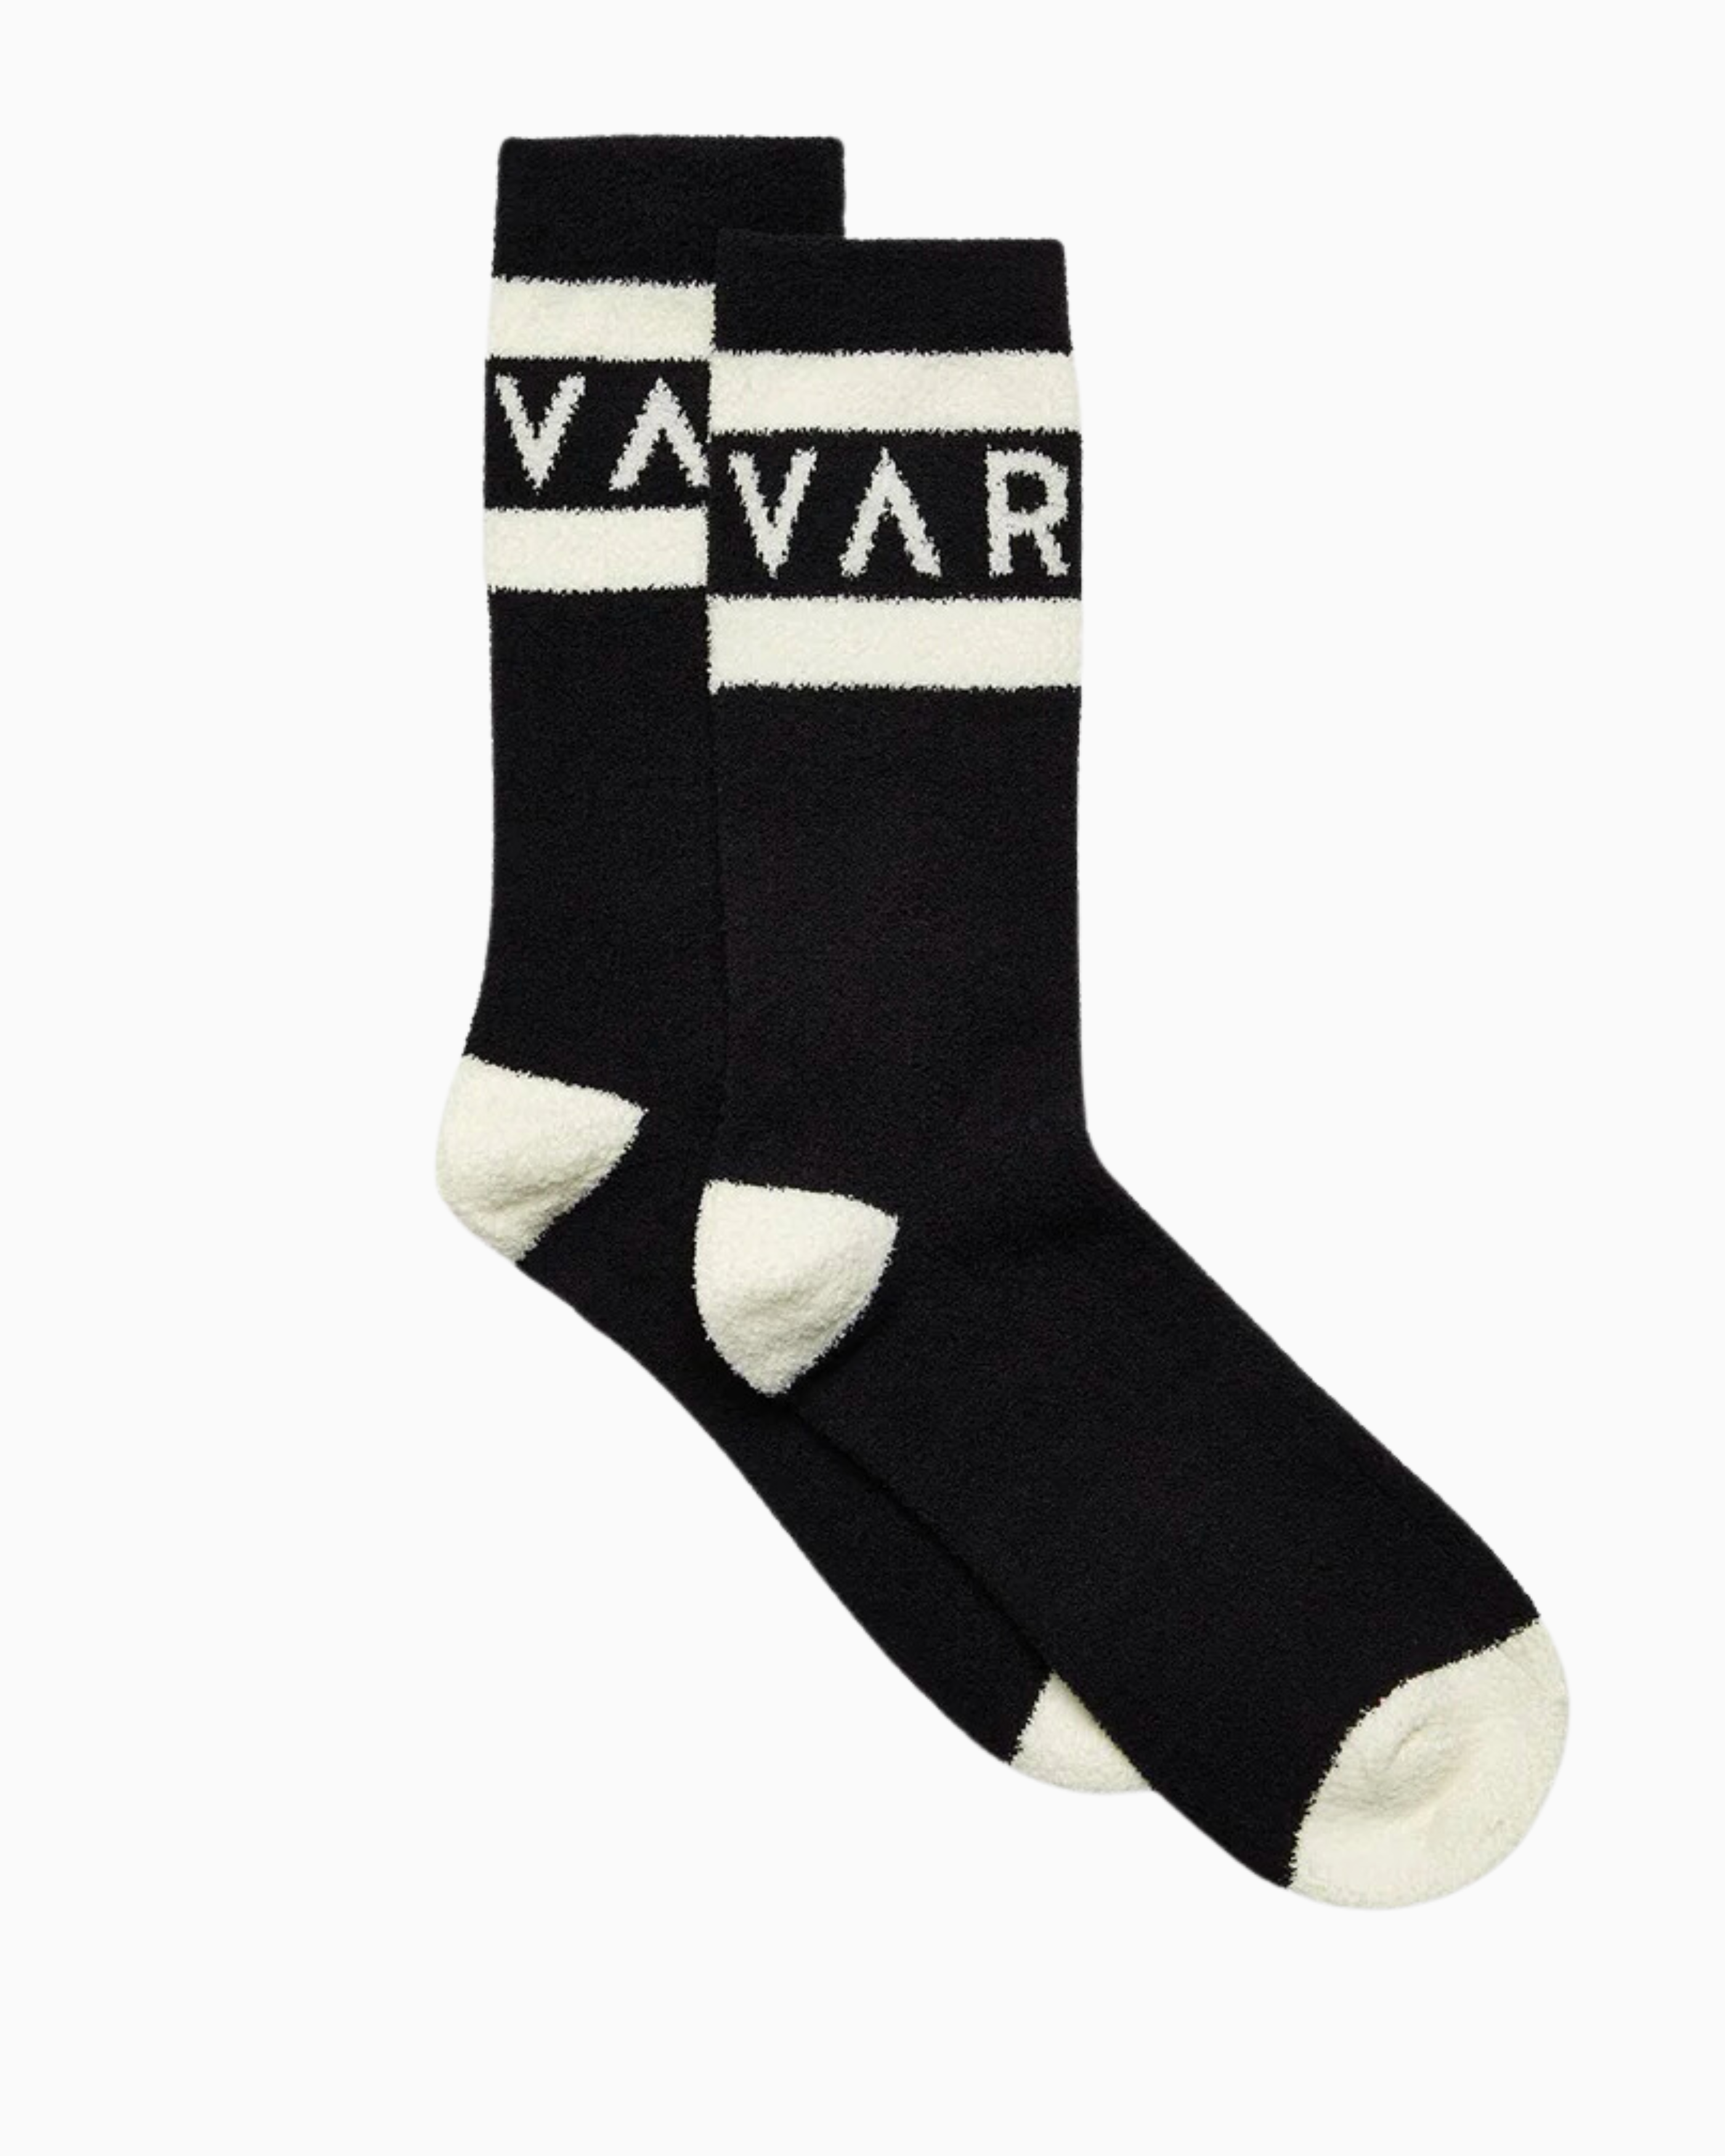 Varley Spencer Sock in Black/Egret